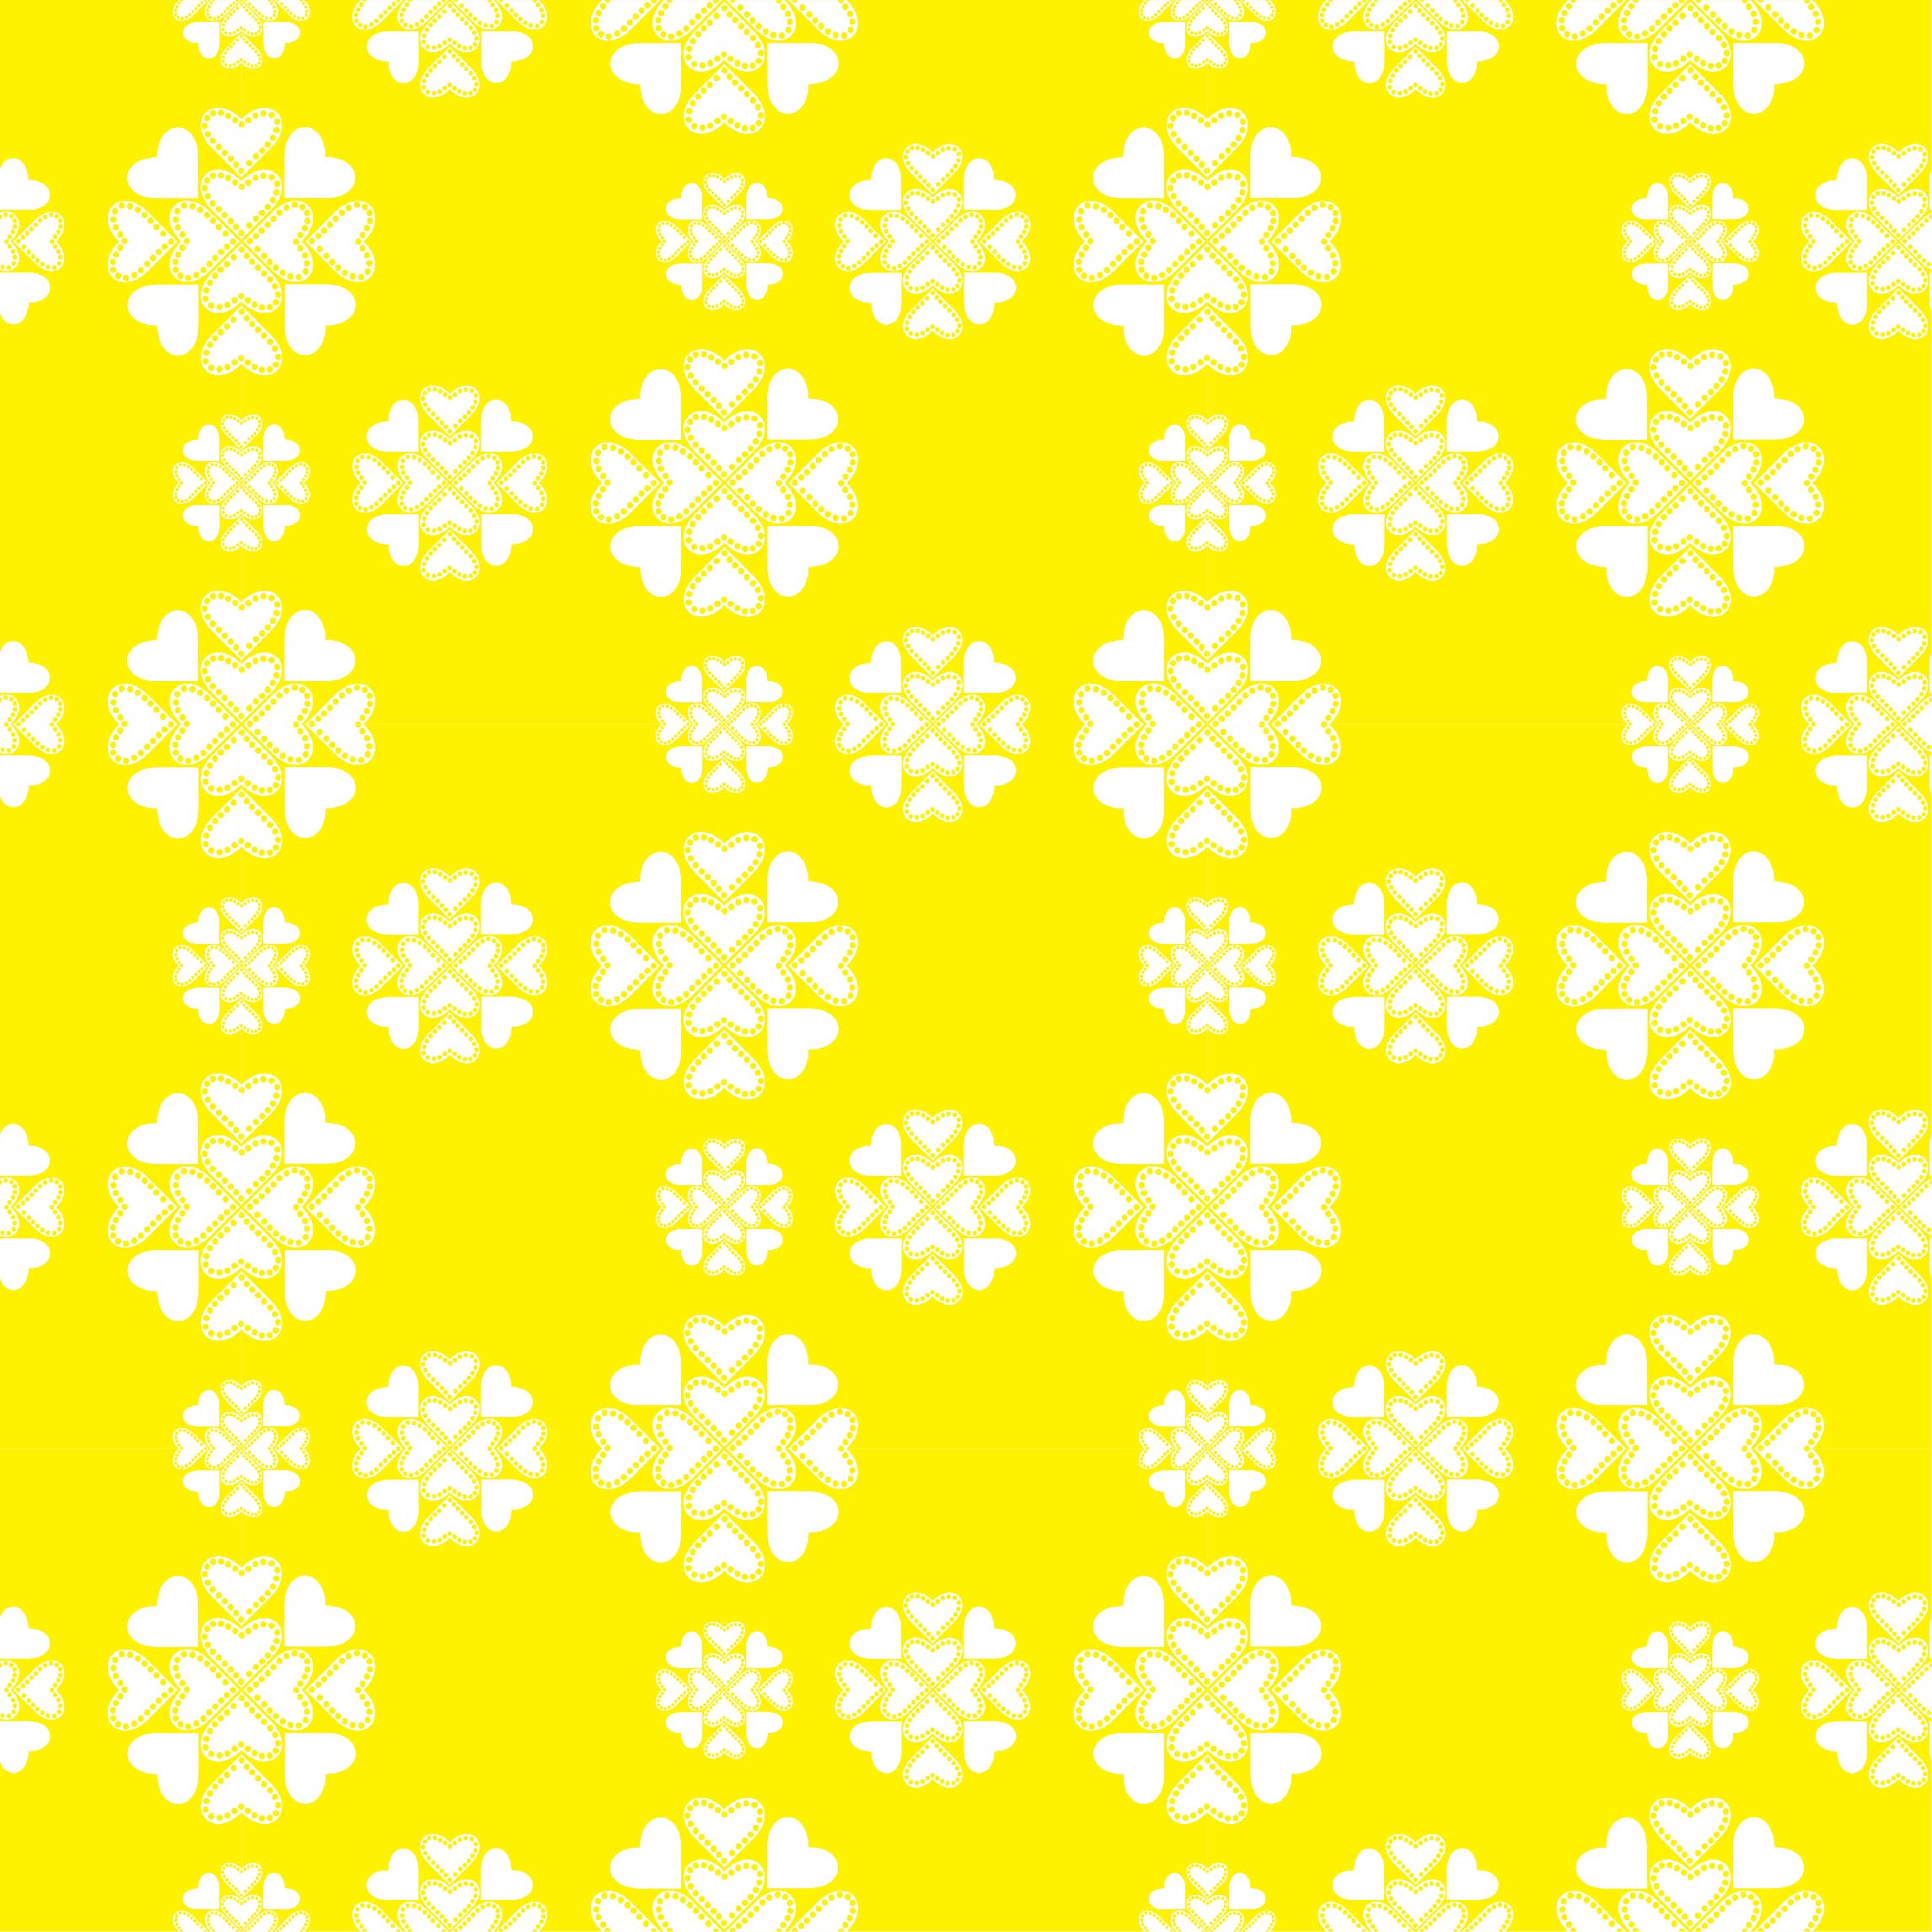 Vivid yellow background with white snowflakes.